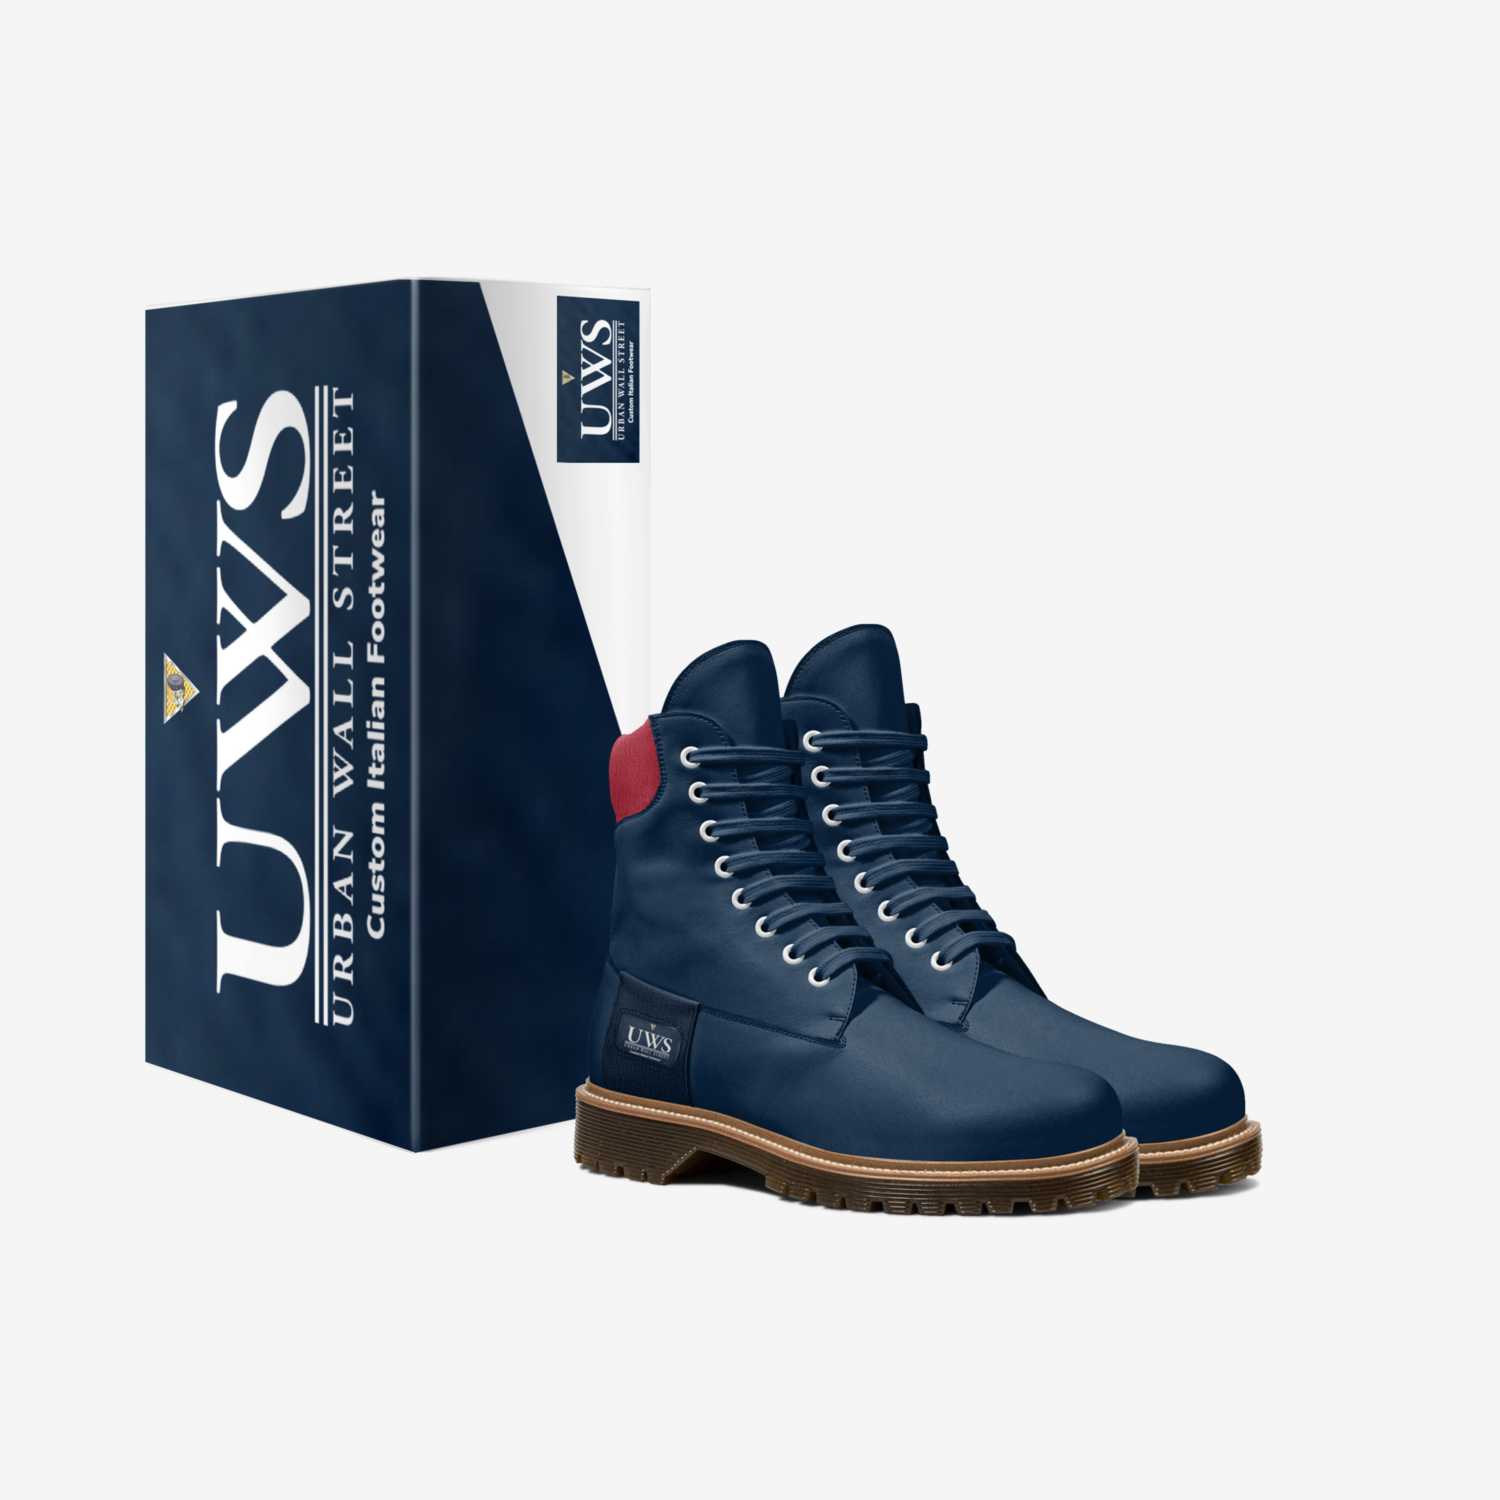 Ravenwoodz custom made in Italy shoes by Urbanwallstreet Earl | Box view